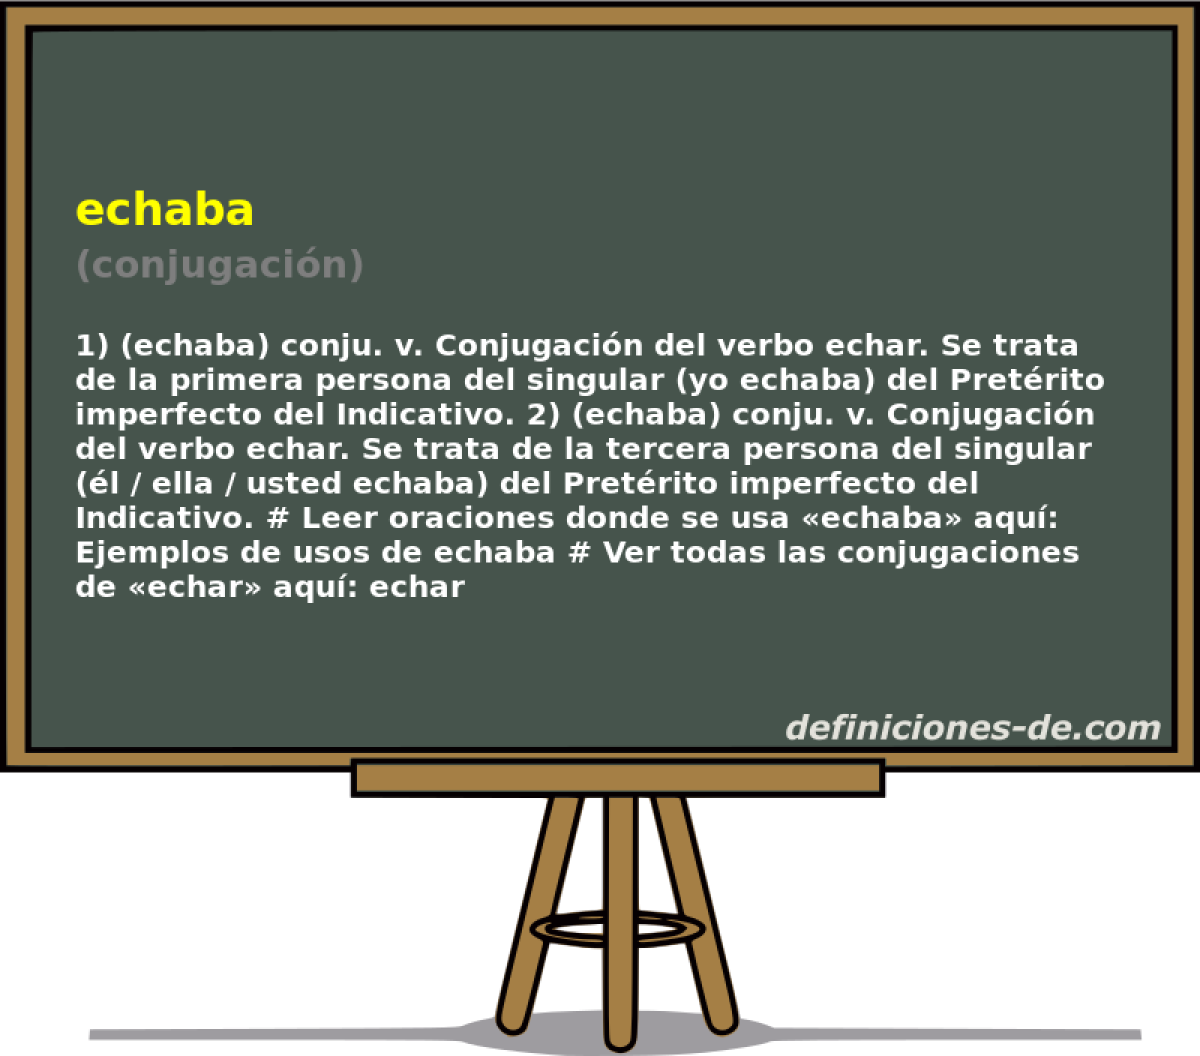 echaba (conjugacin)